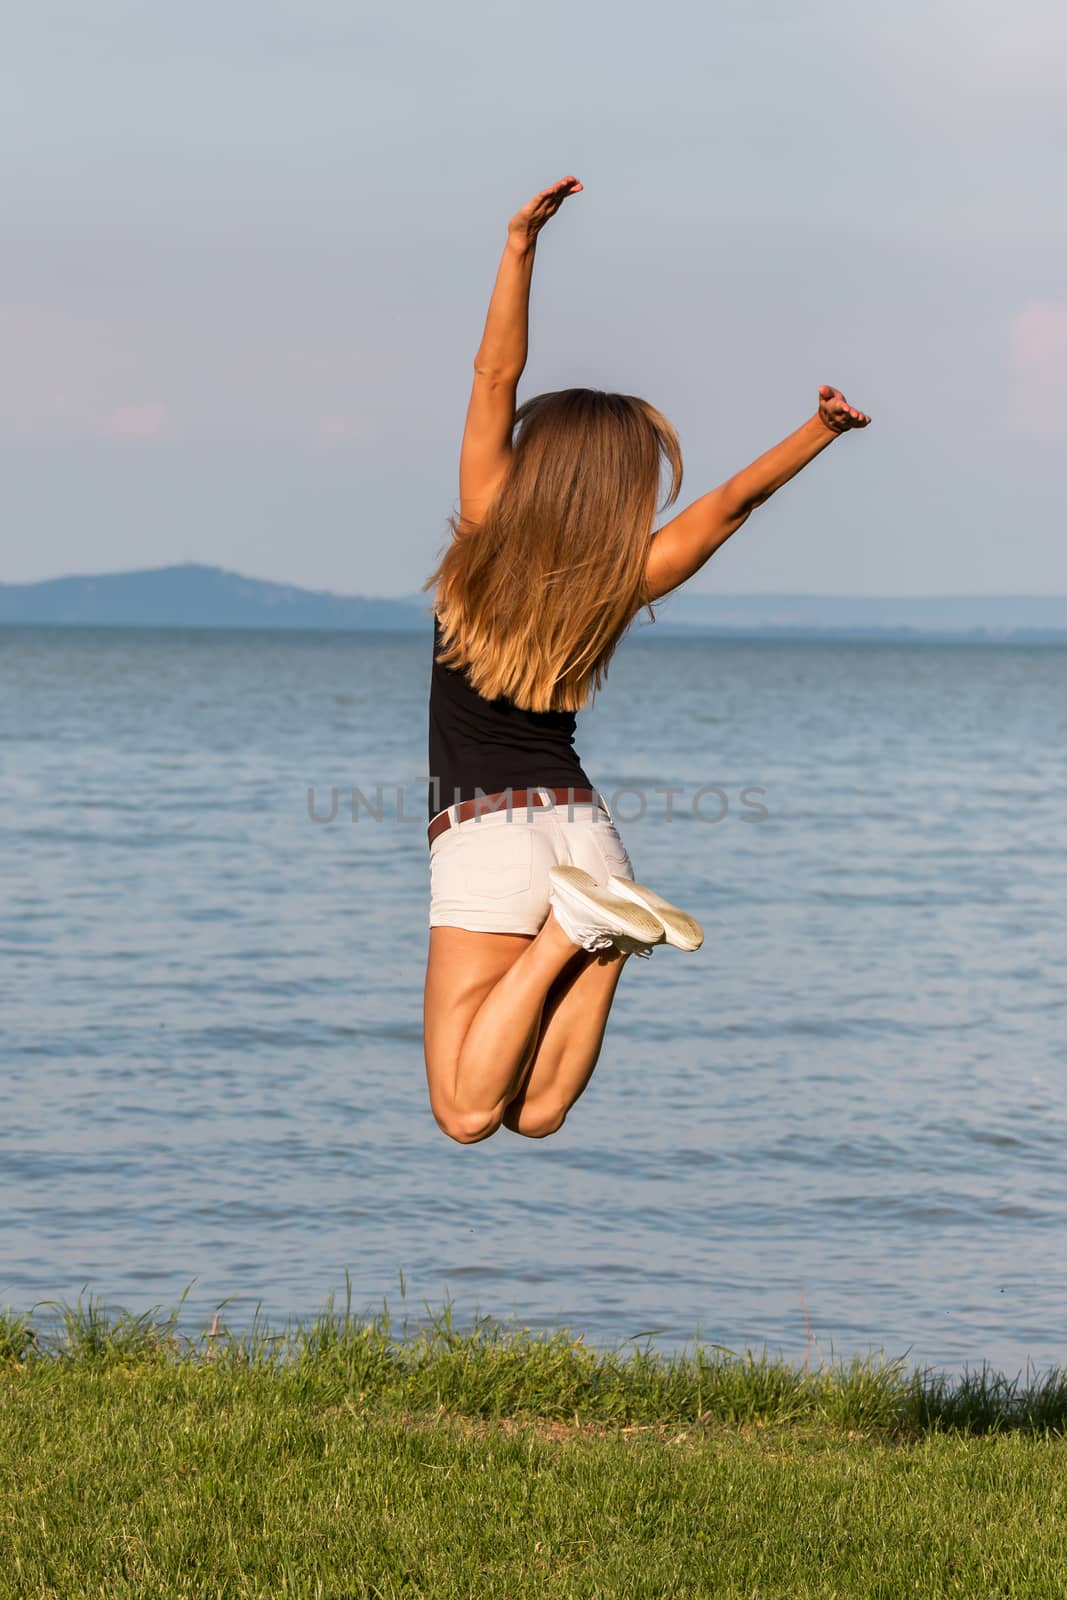 Pretty girl jumping near the lake